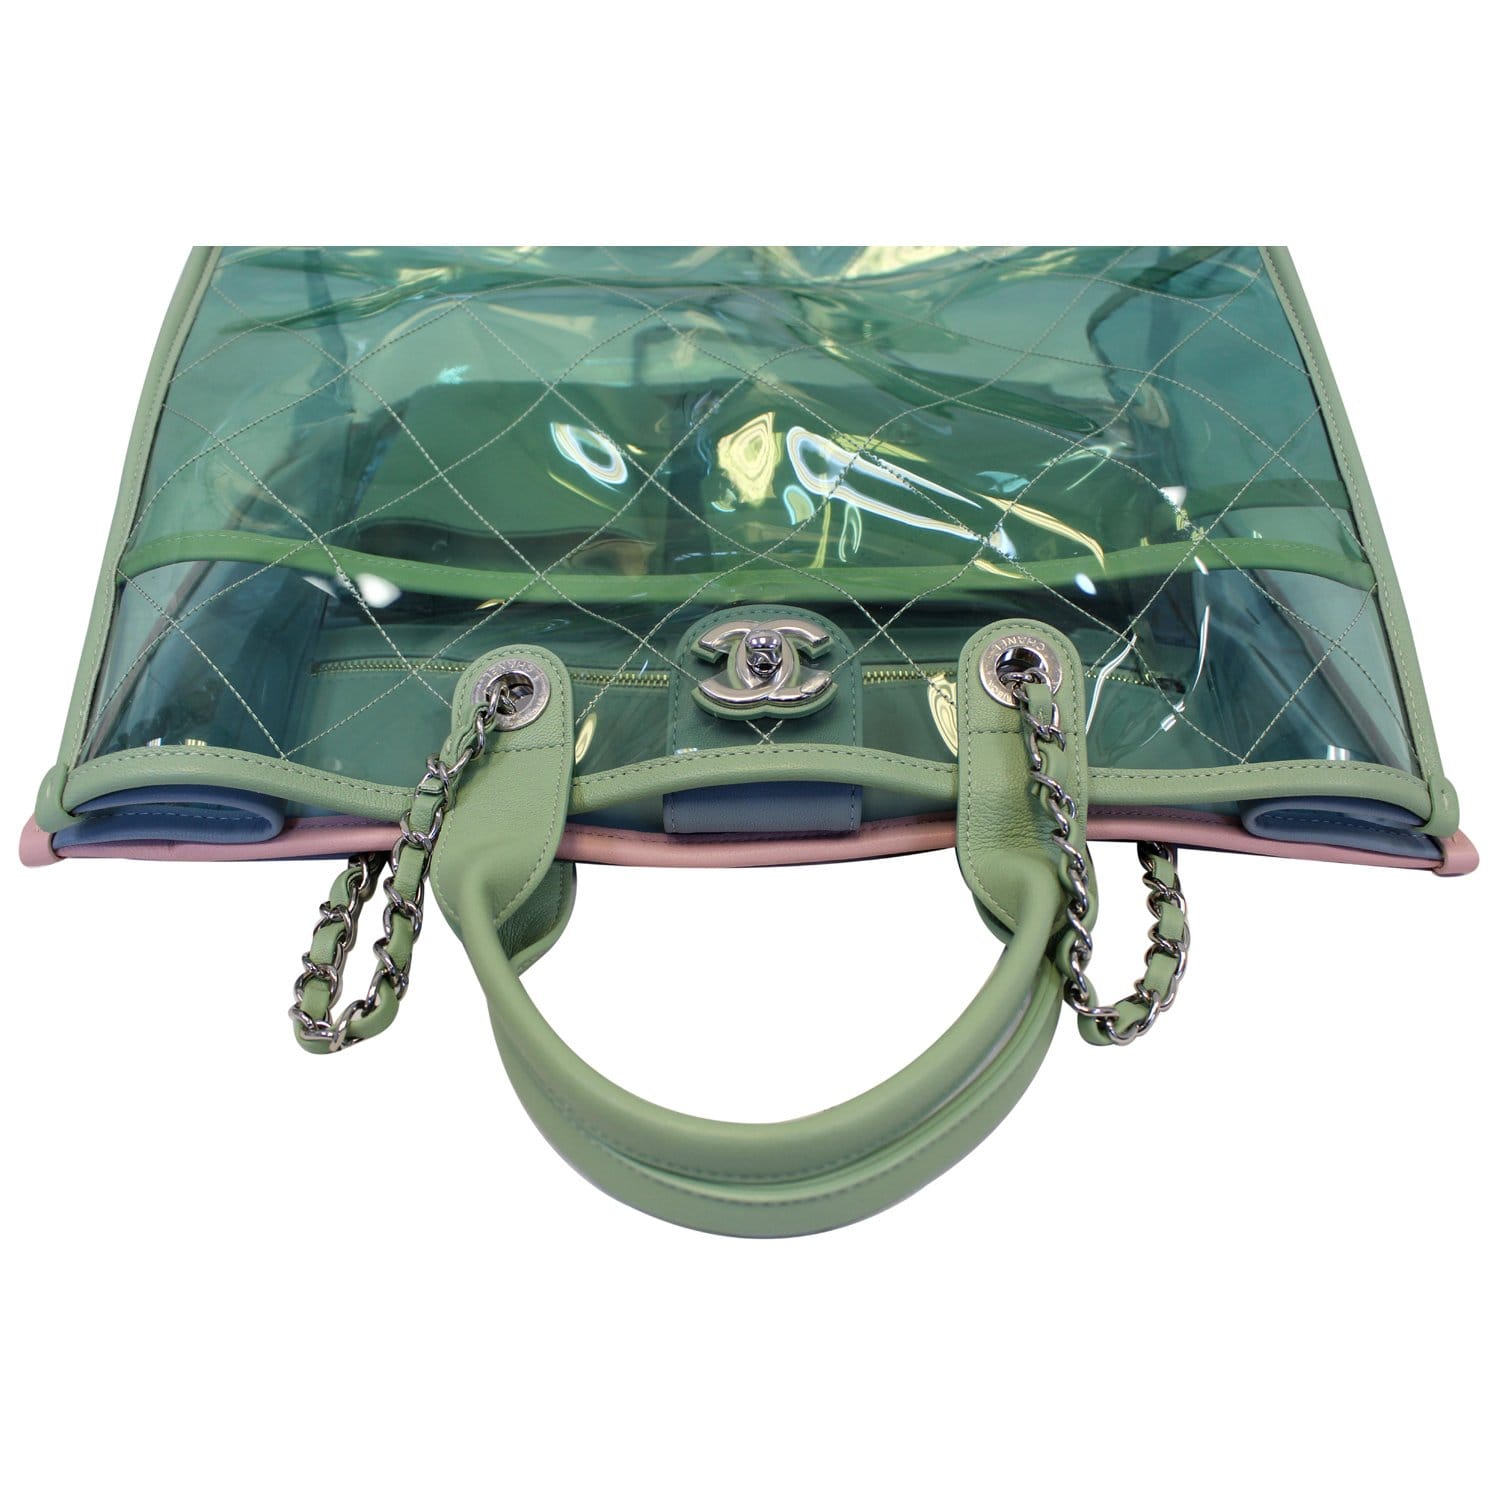 Chanel Handbag for Sale in Alpharetta, GA - OfferUp